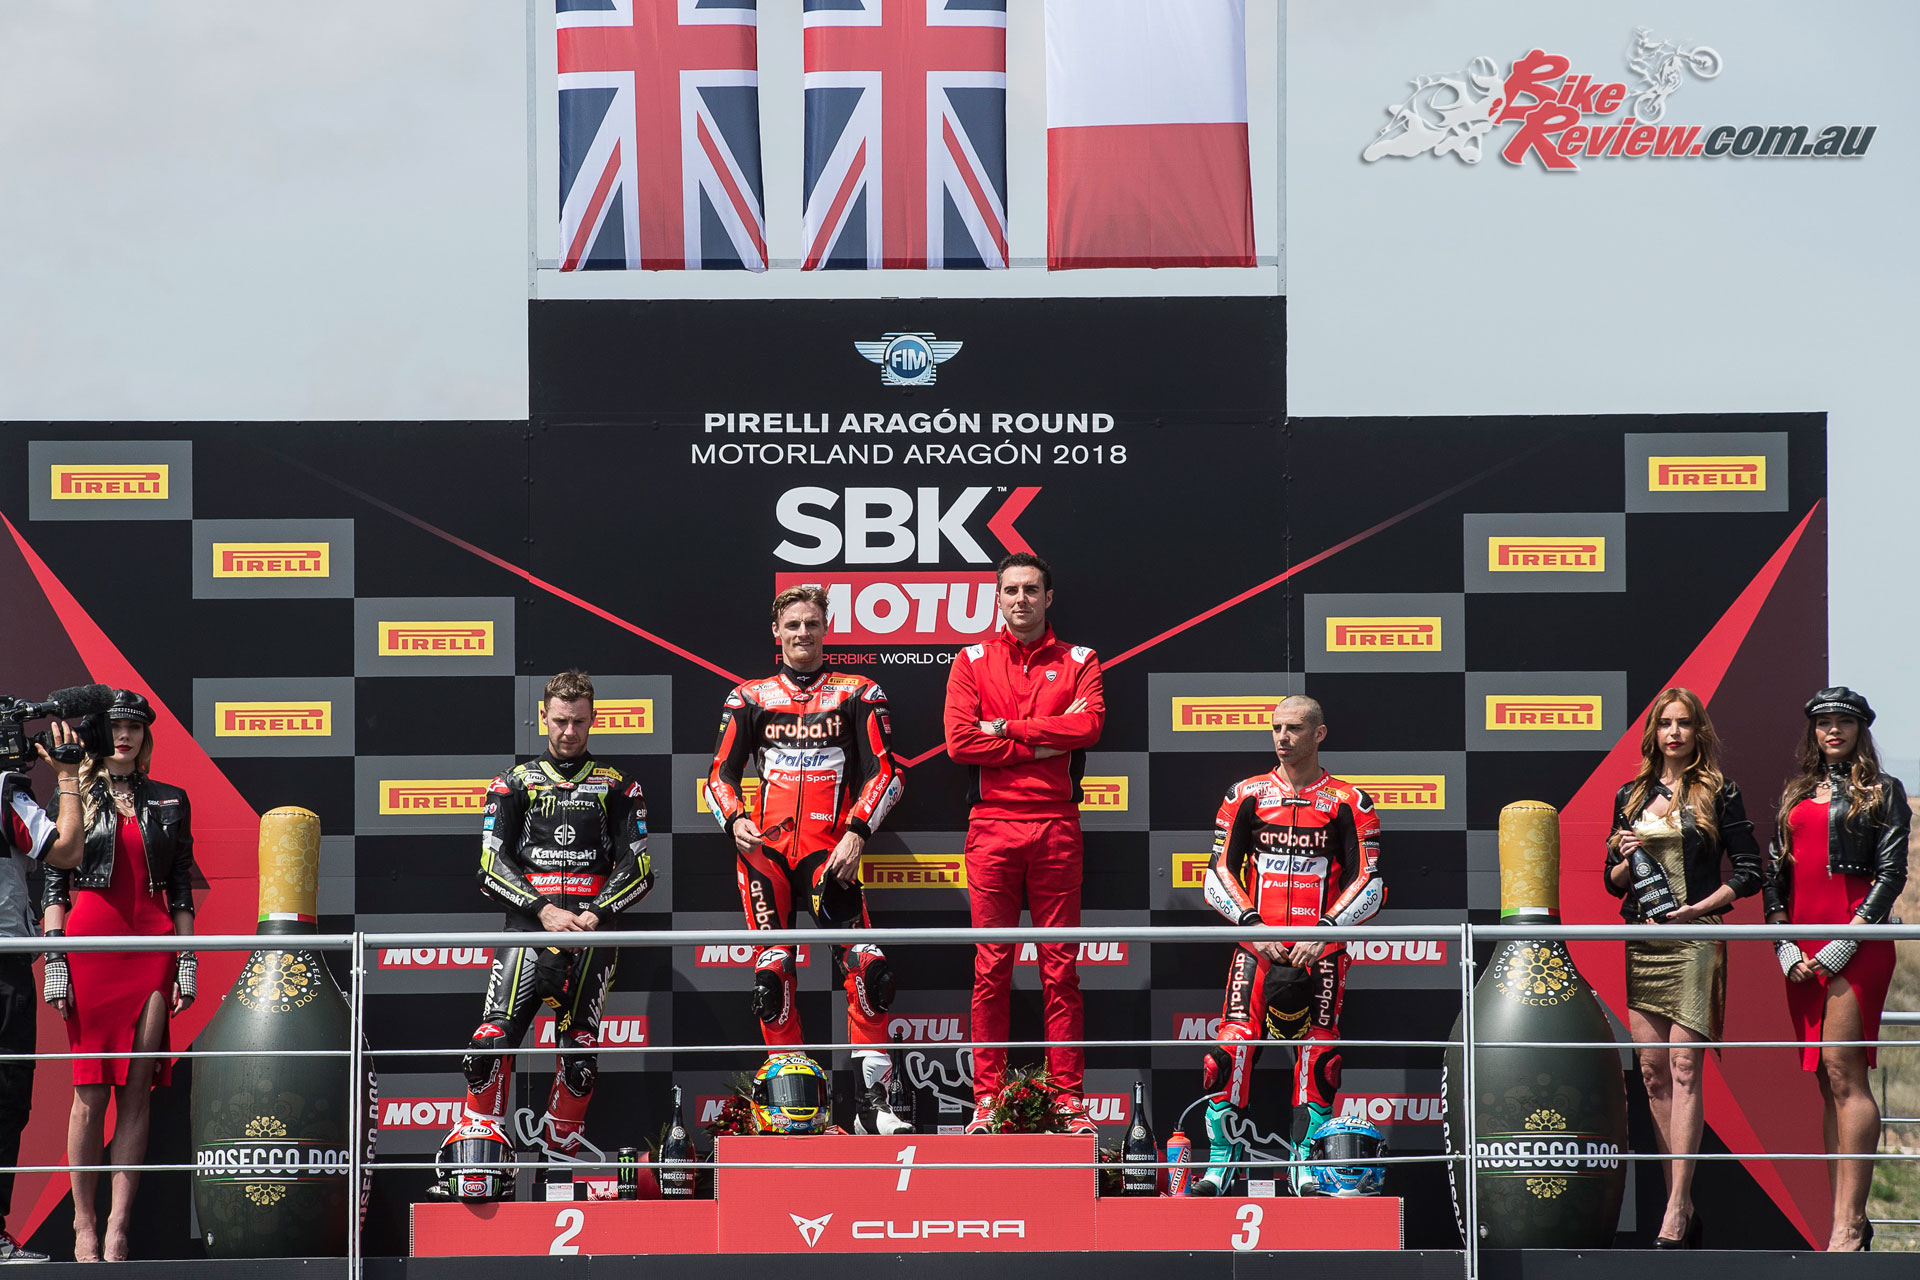 Race 2 podium - Aragon, 2018 - Image by Geebee Images